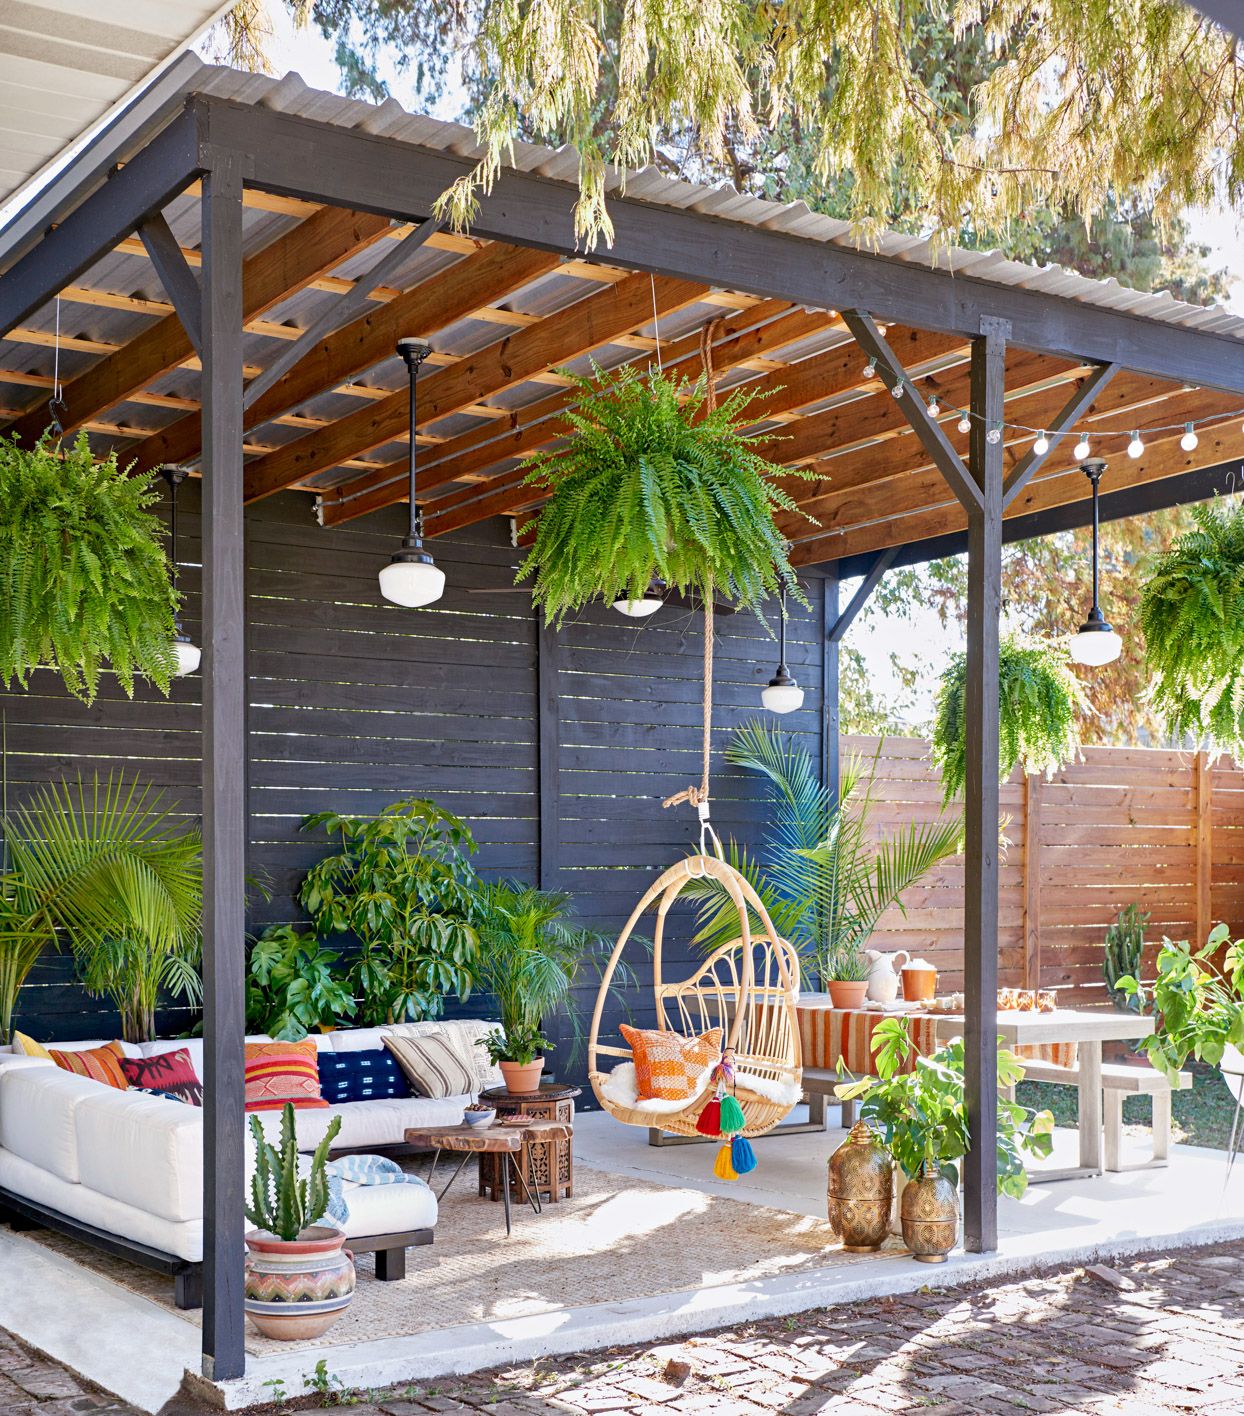 Backyard Decorating Ideas Transform Your Outdoor Space with Creative Backyard Decor